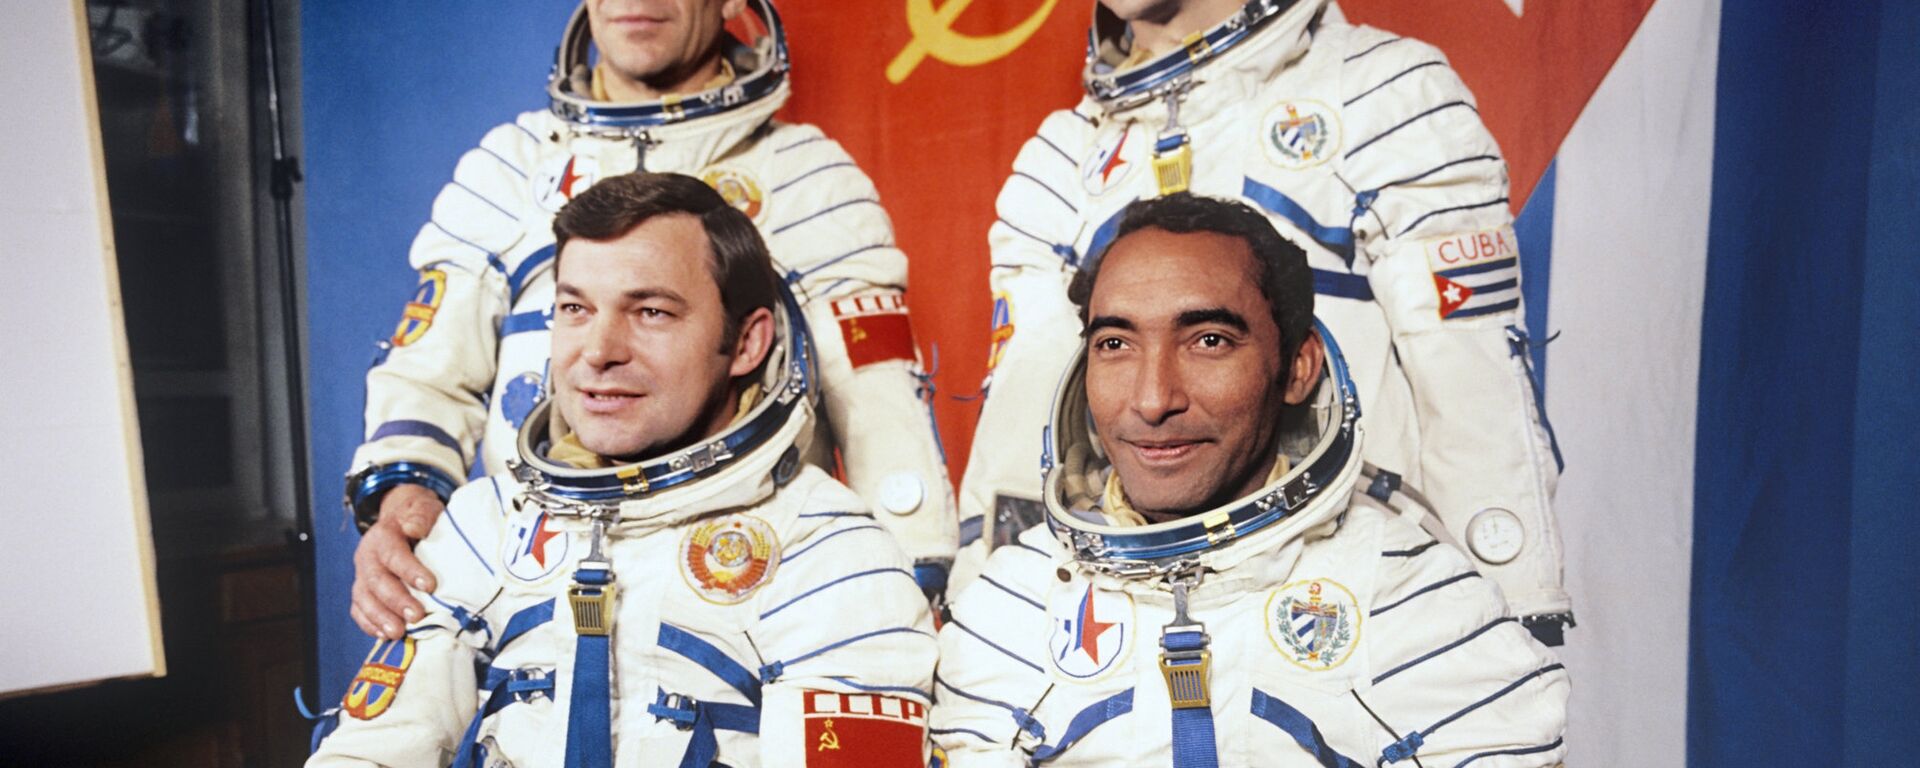 El cosmonauta Arnaldo Tamayo junto al héroe soviético, Yuri Romanenko, y sus traductores en la Tierra - Sputnik Mundo, 1920, 12.04.2019